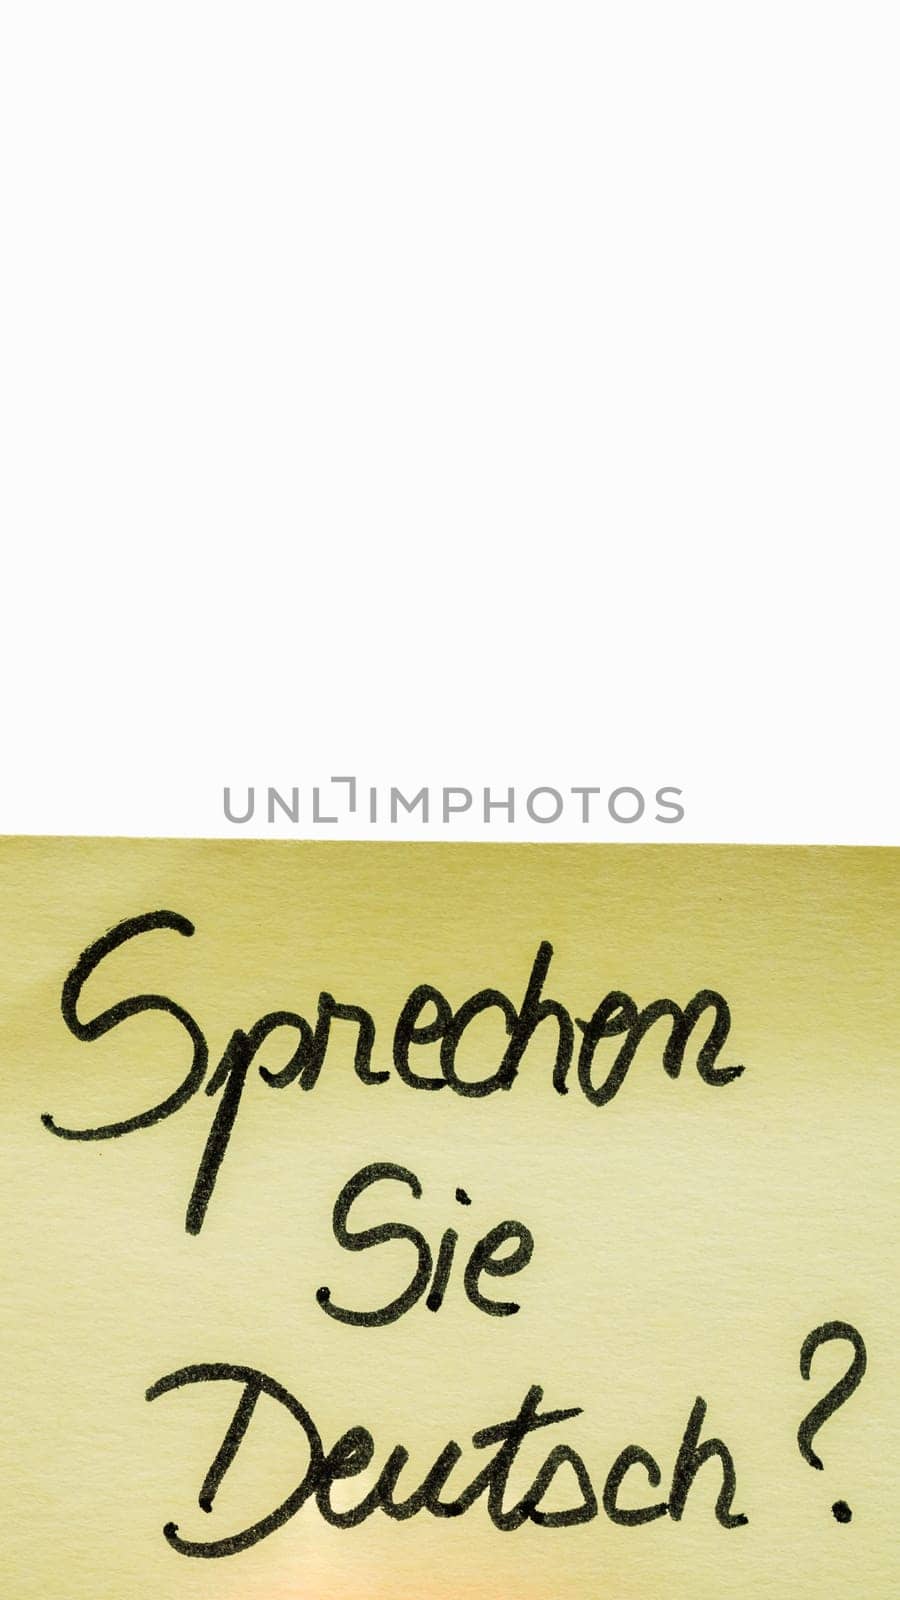 Sprechen sie deutsch ( do you speak german) handwriting text close up isolated on yellow paper with copy space.